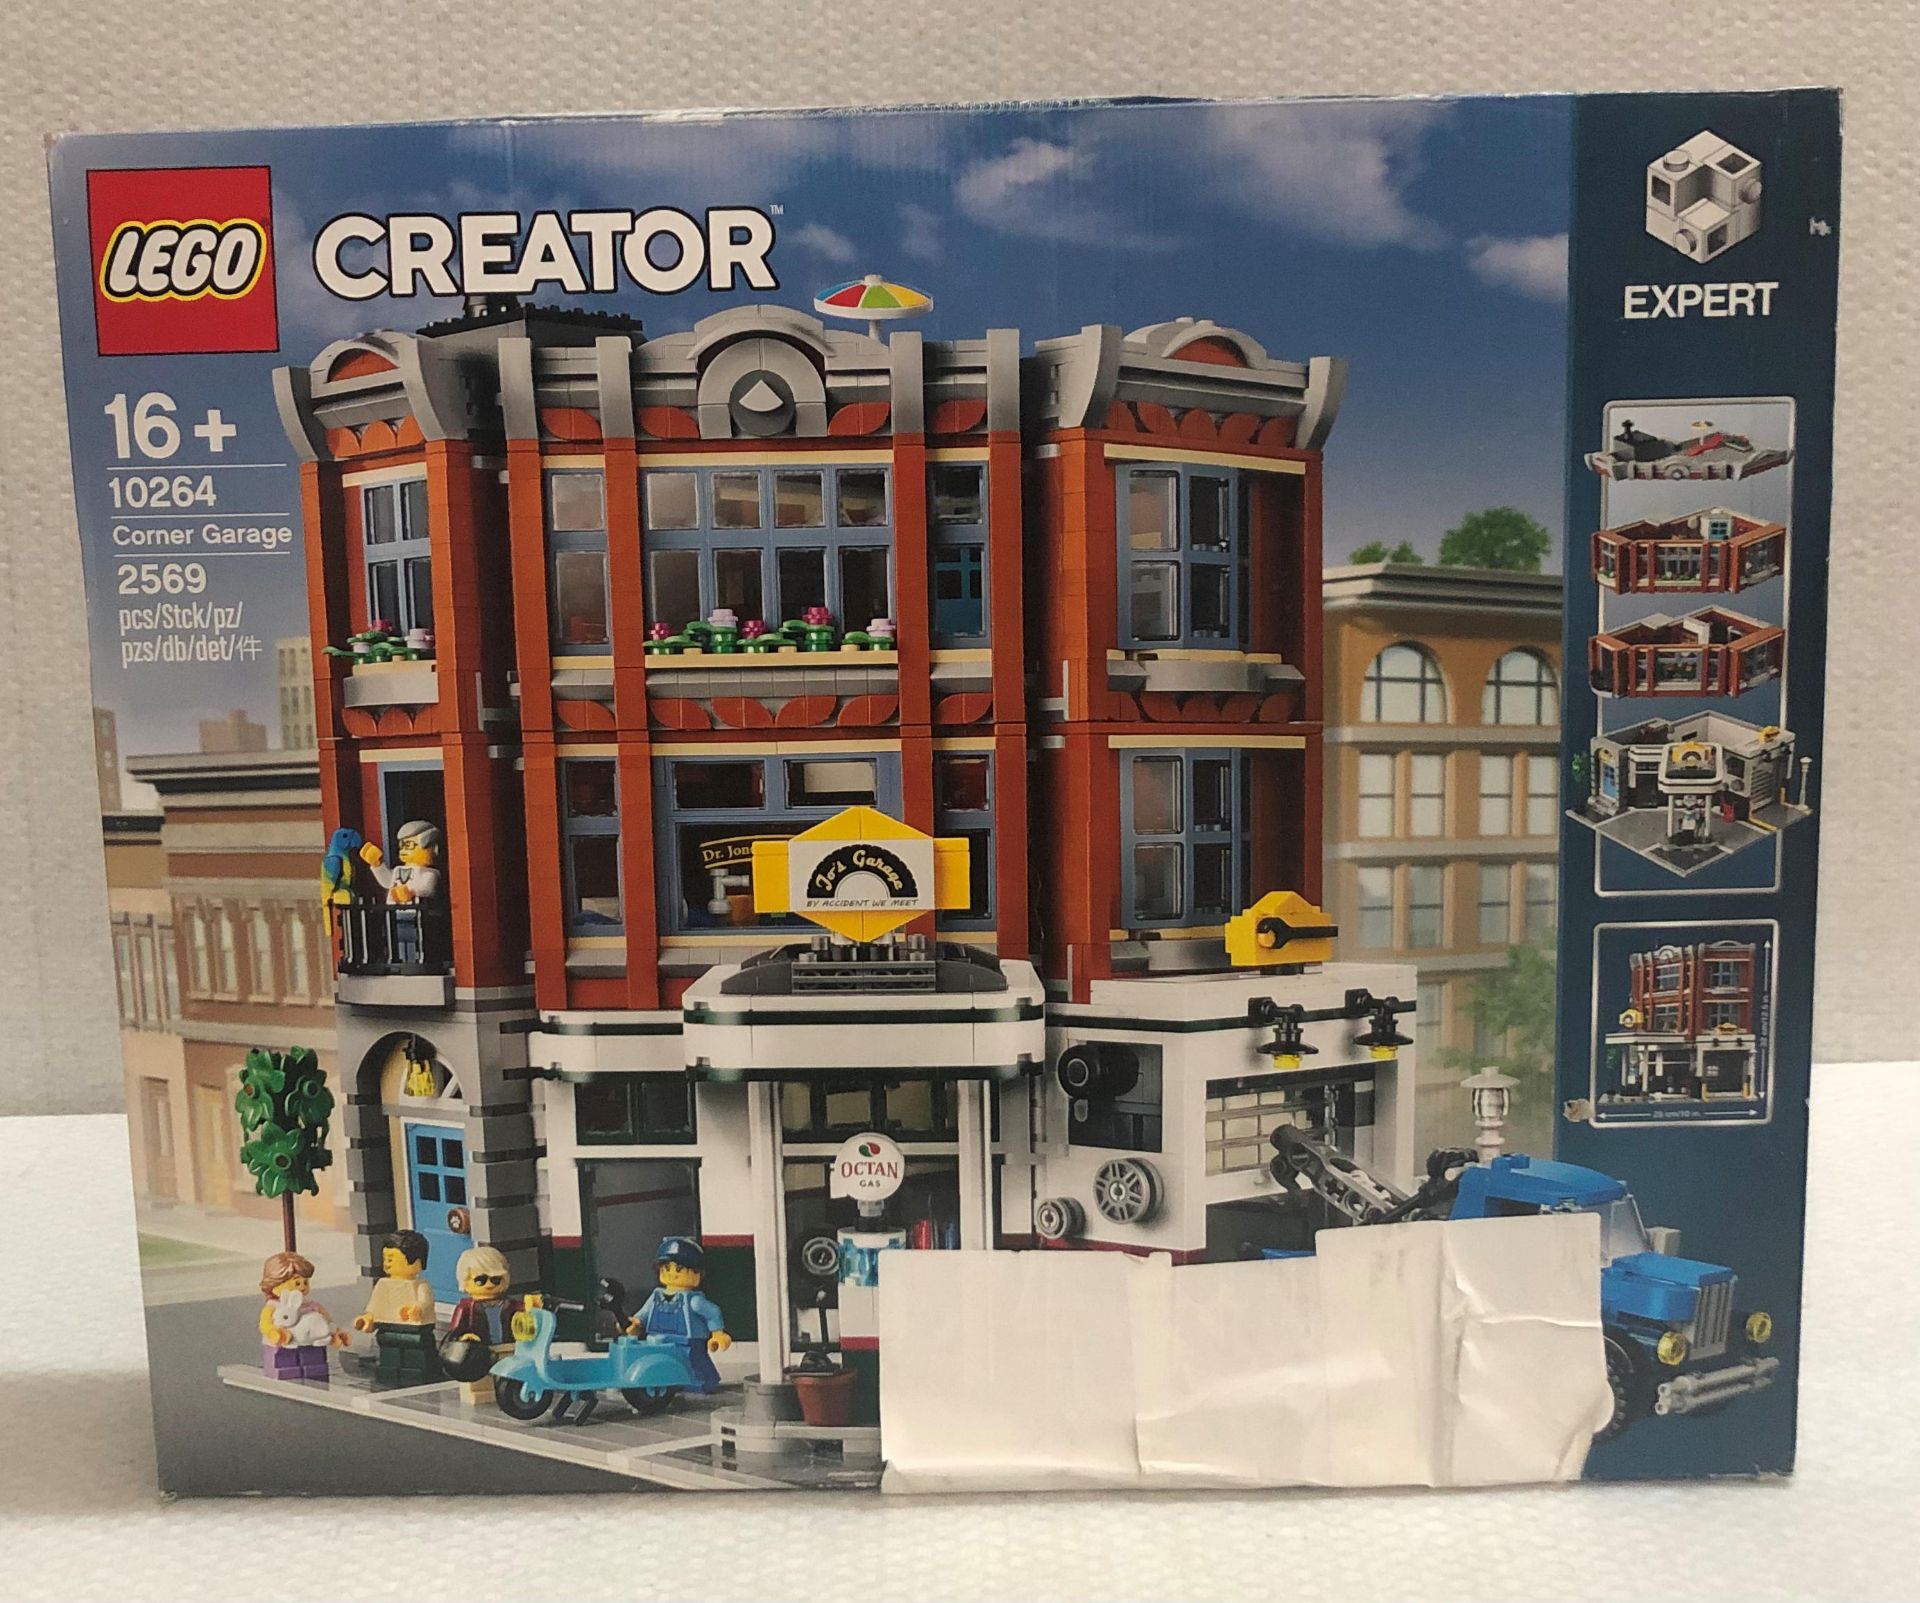 1 x Lego Creator Expert Corner Garage - Model 10264 - New/Boxed - Image 2 of 6